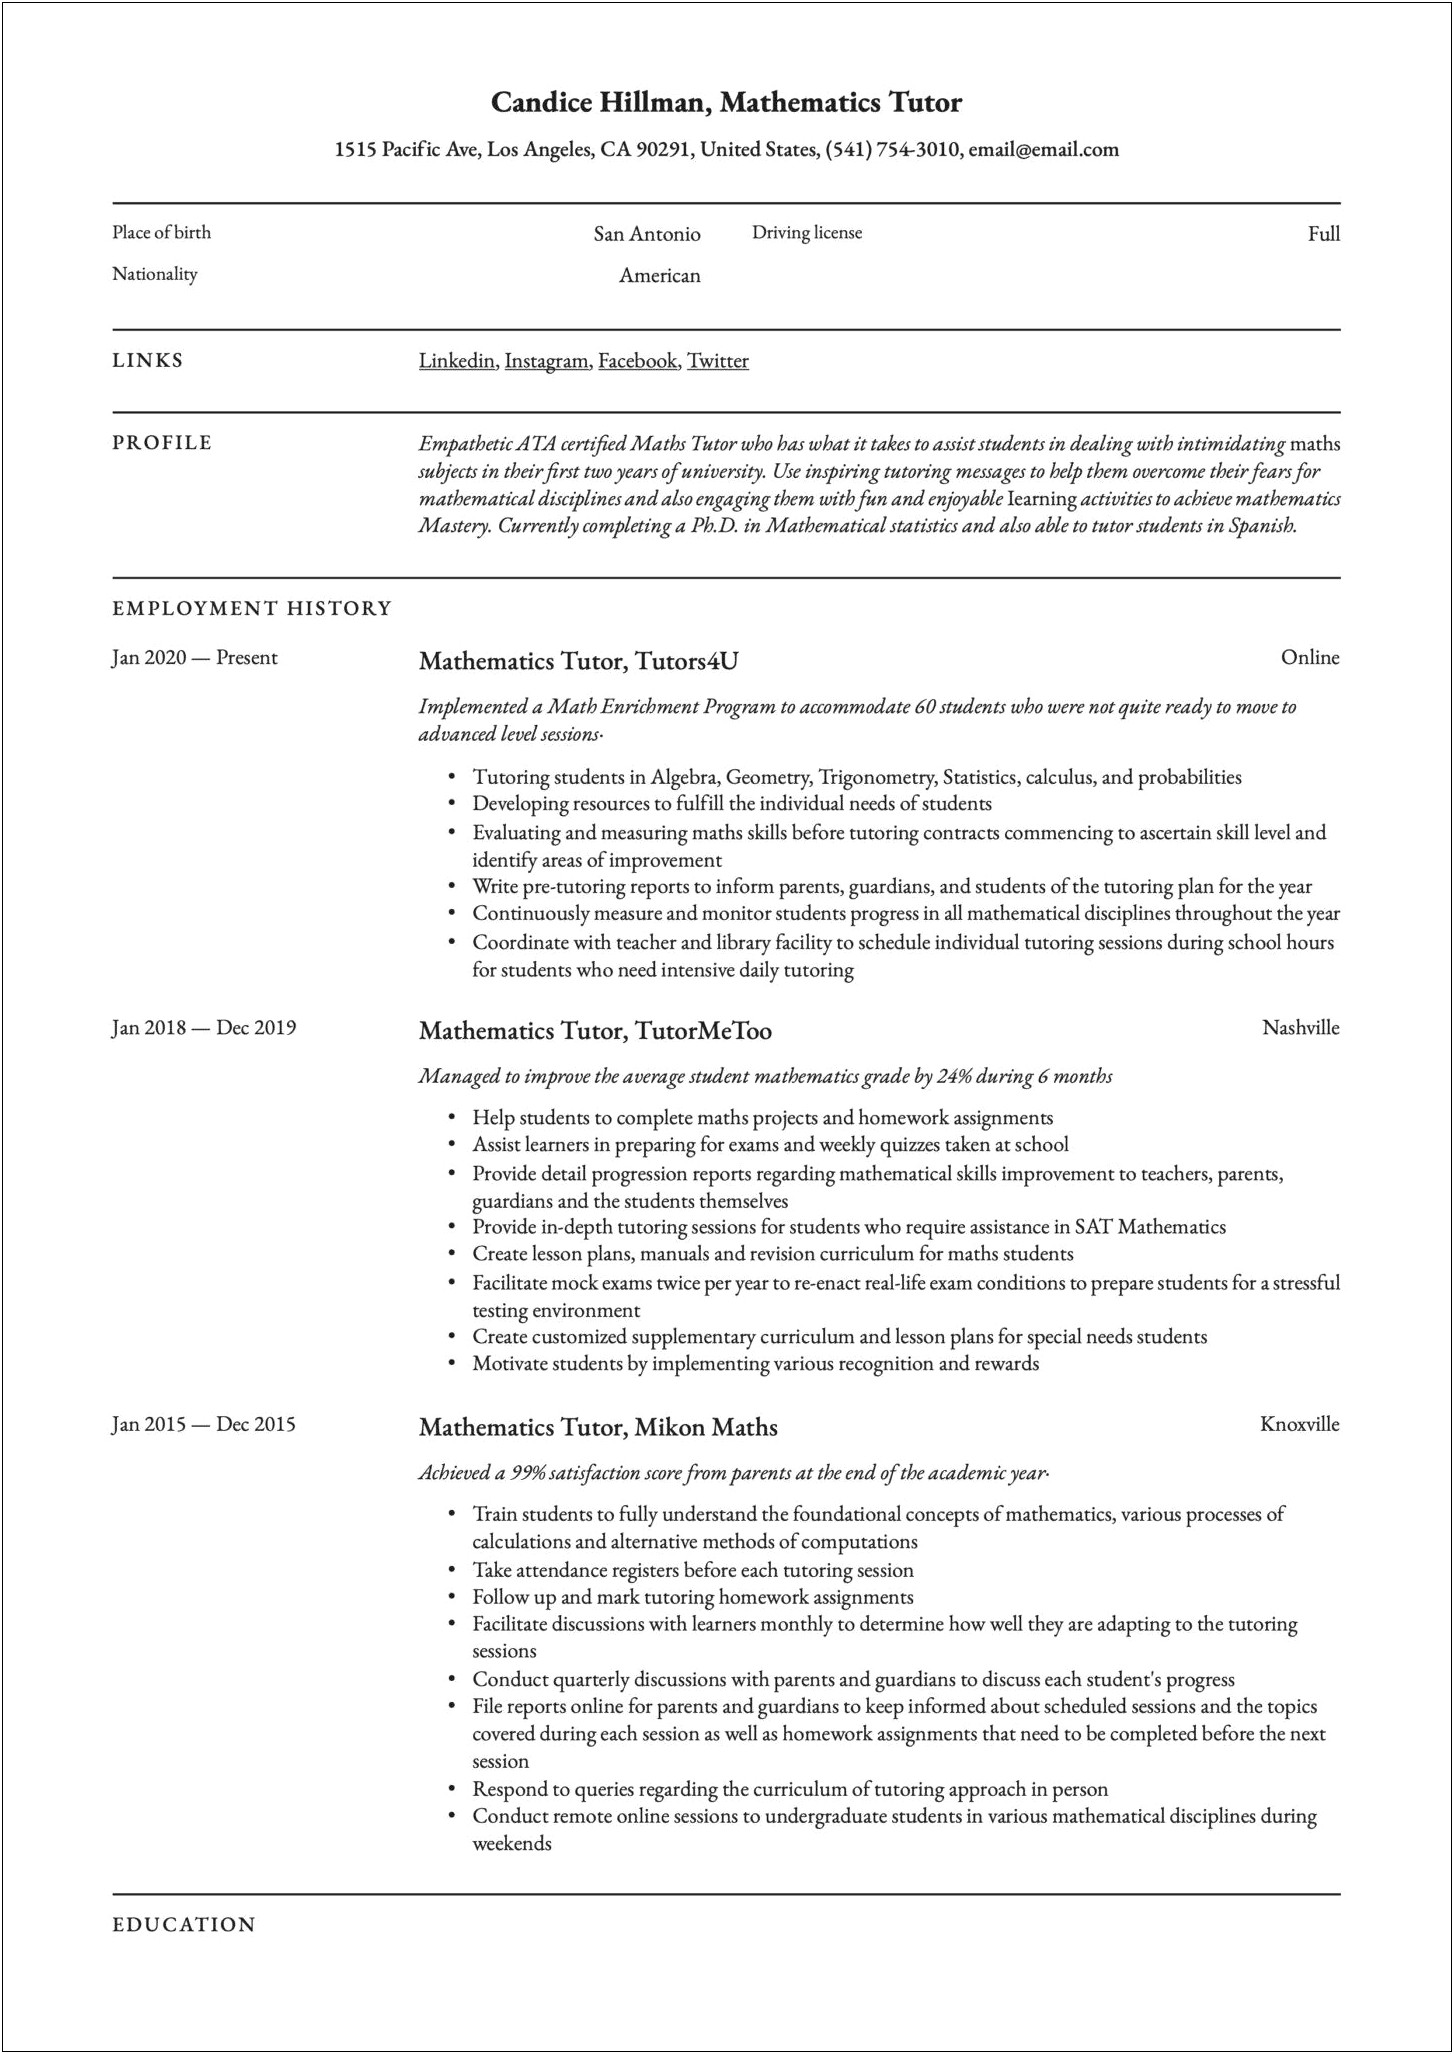 Resume For Middle School Math Teacher